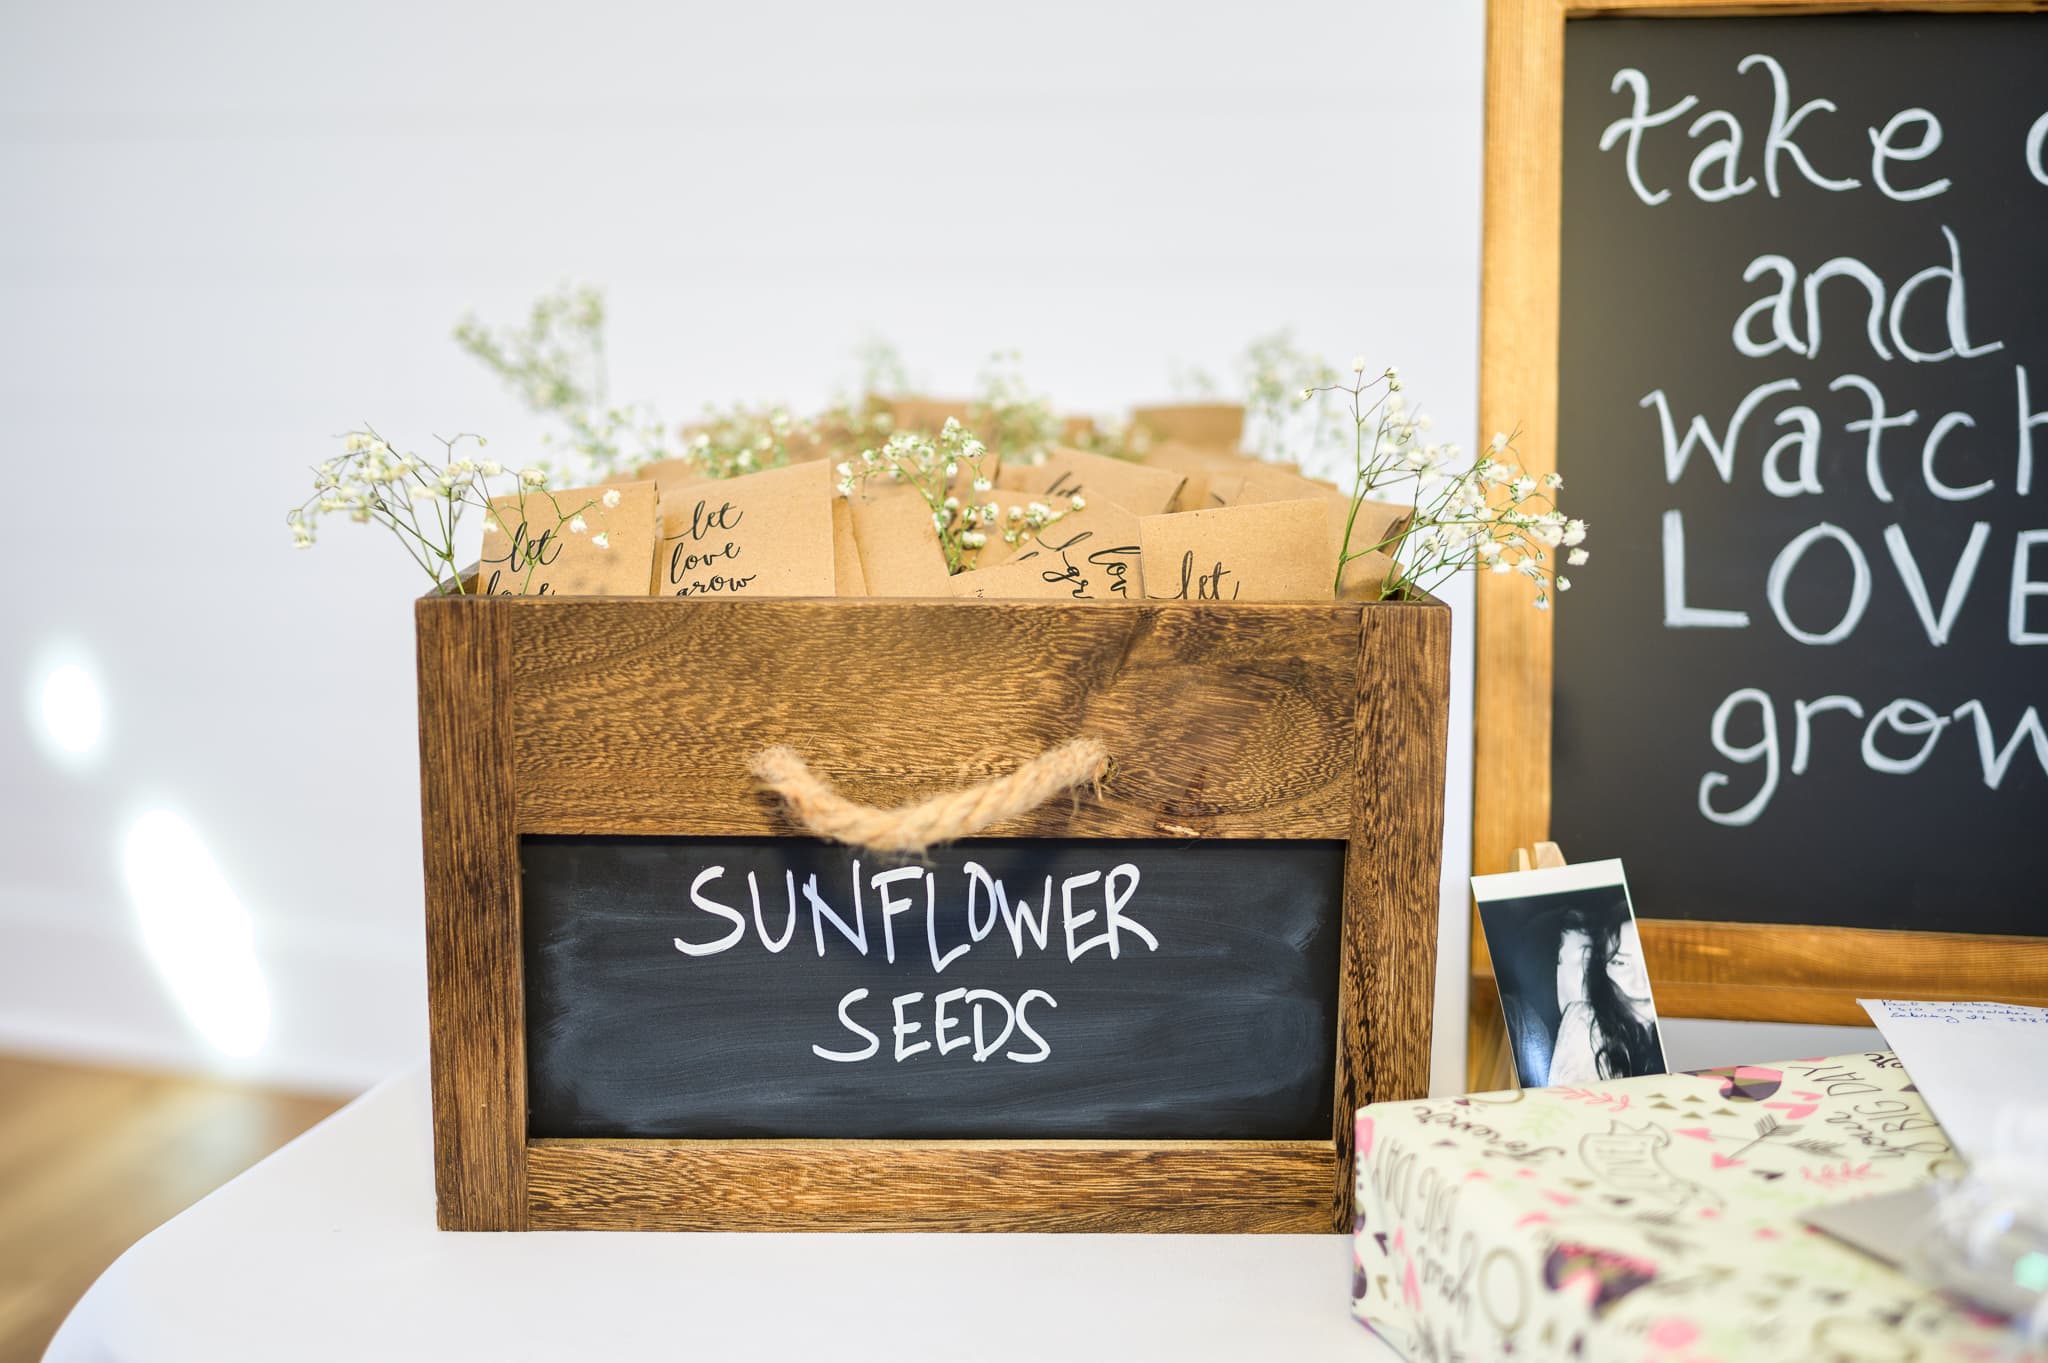 Sunflower seeds - The Venue at White Oaks Farm